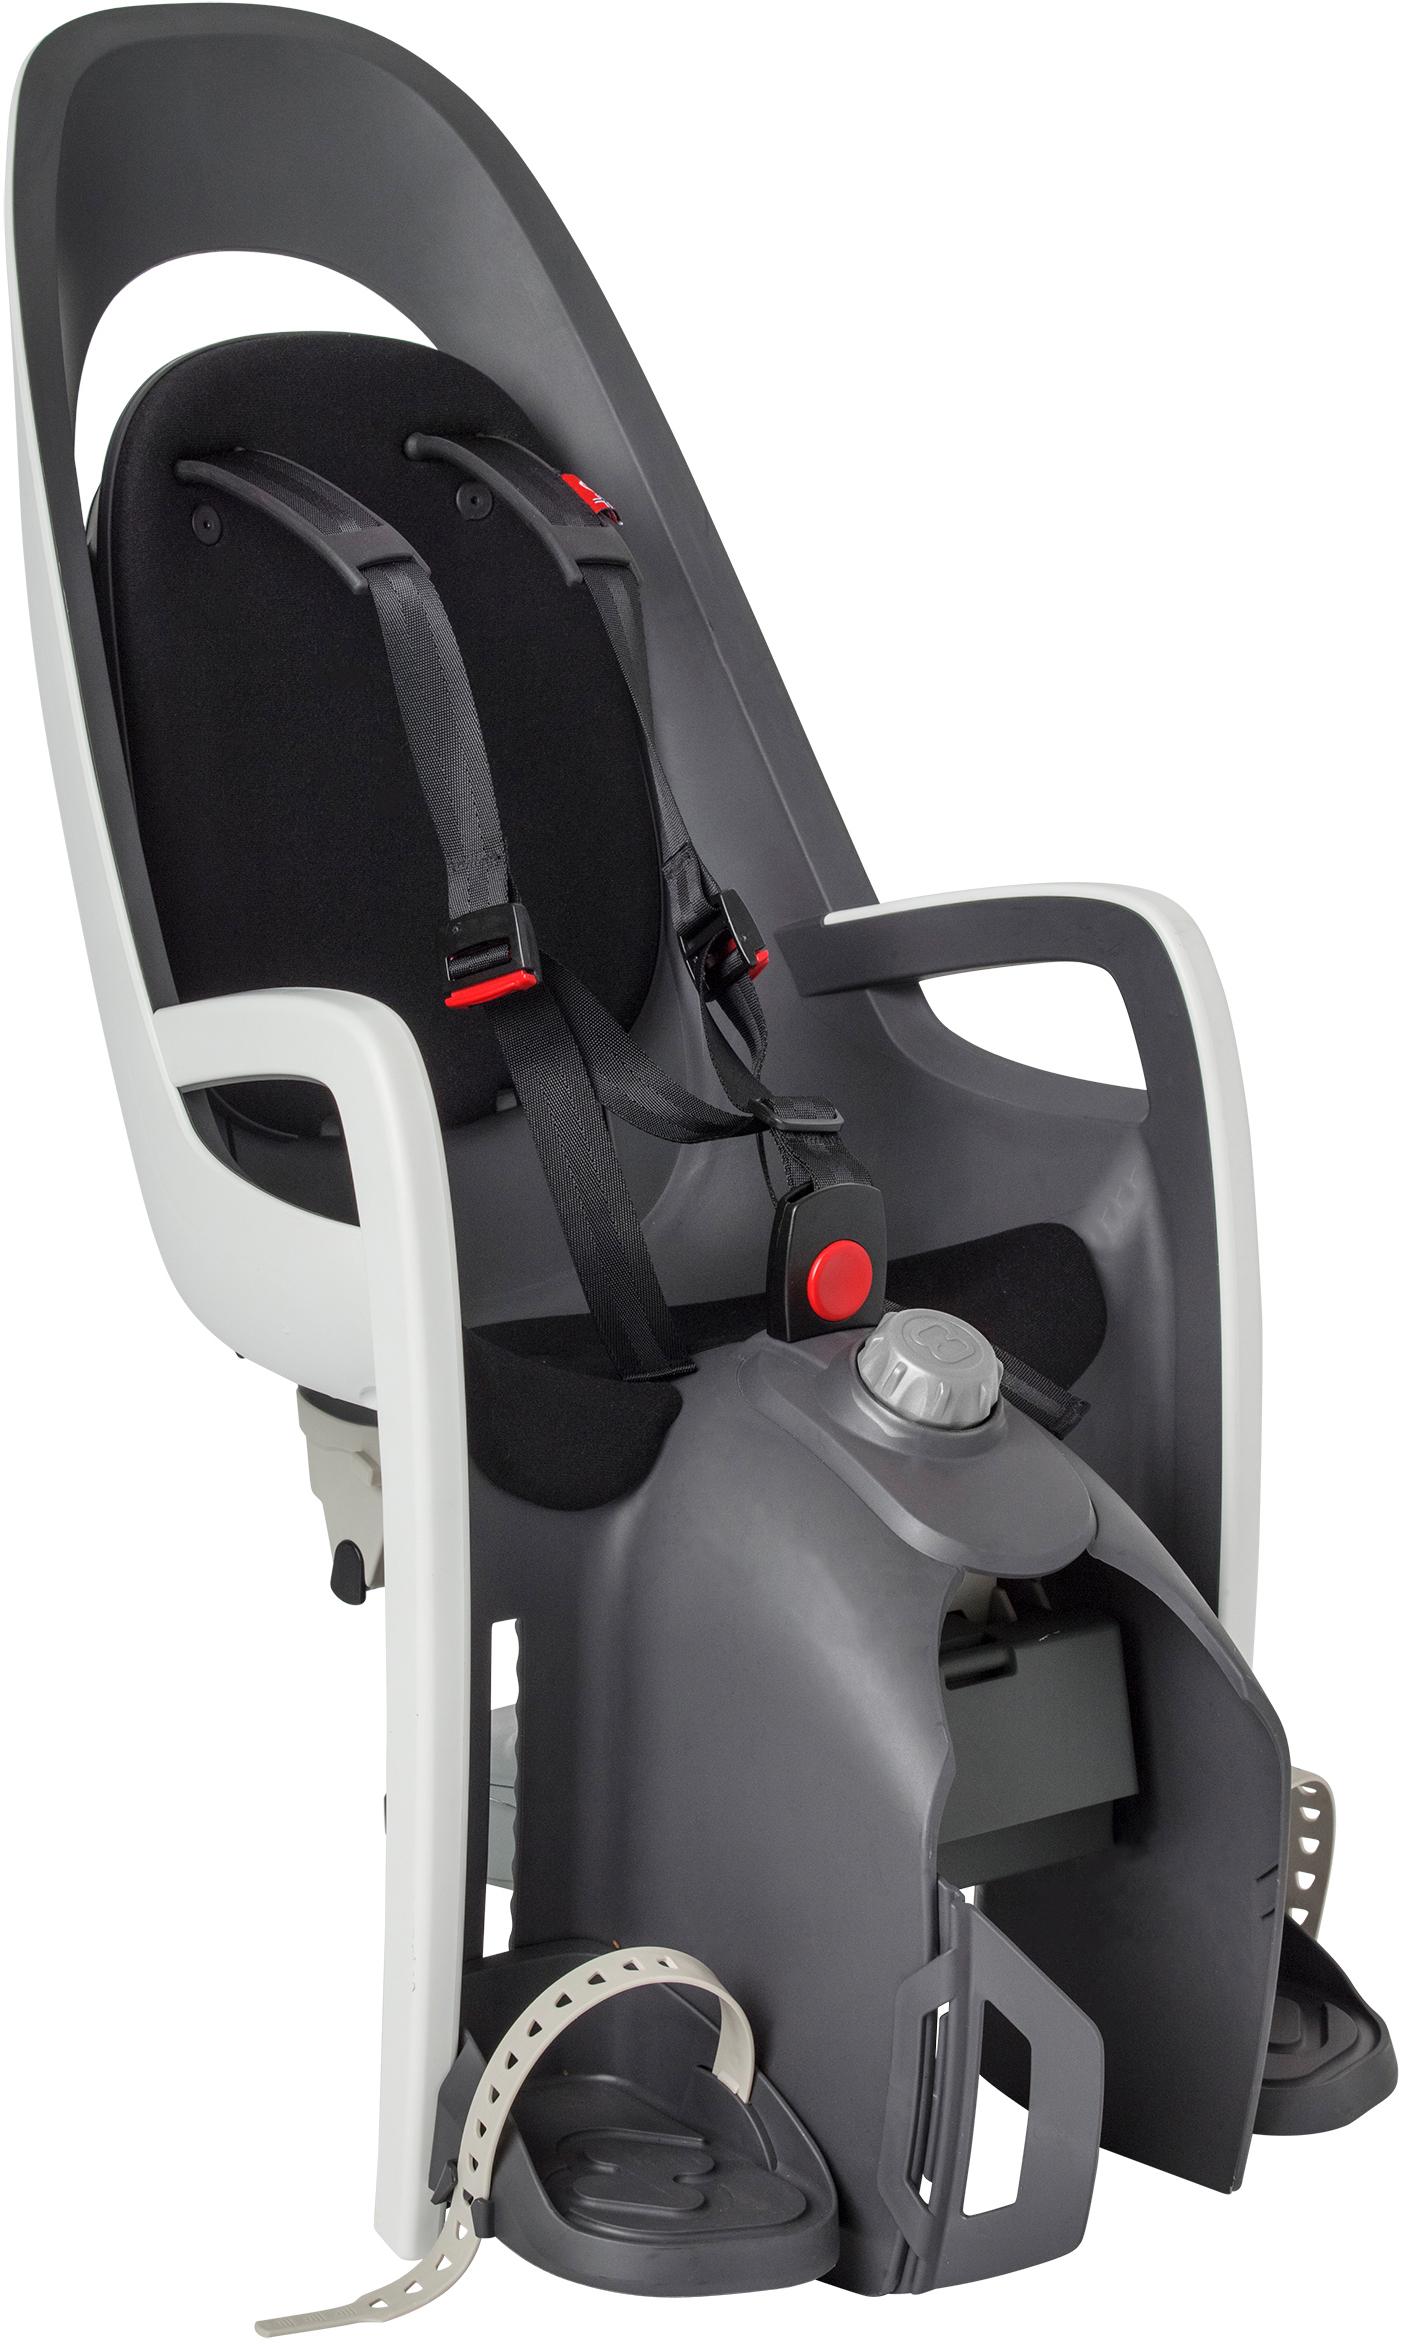 pannier mounted child seat